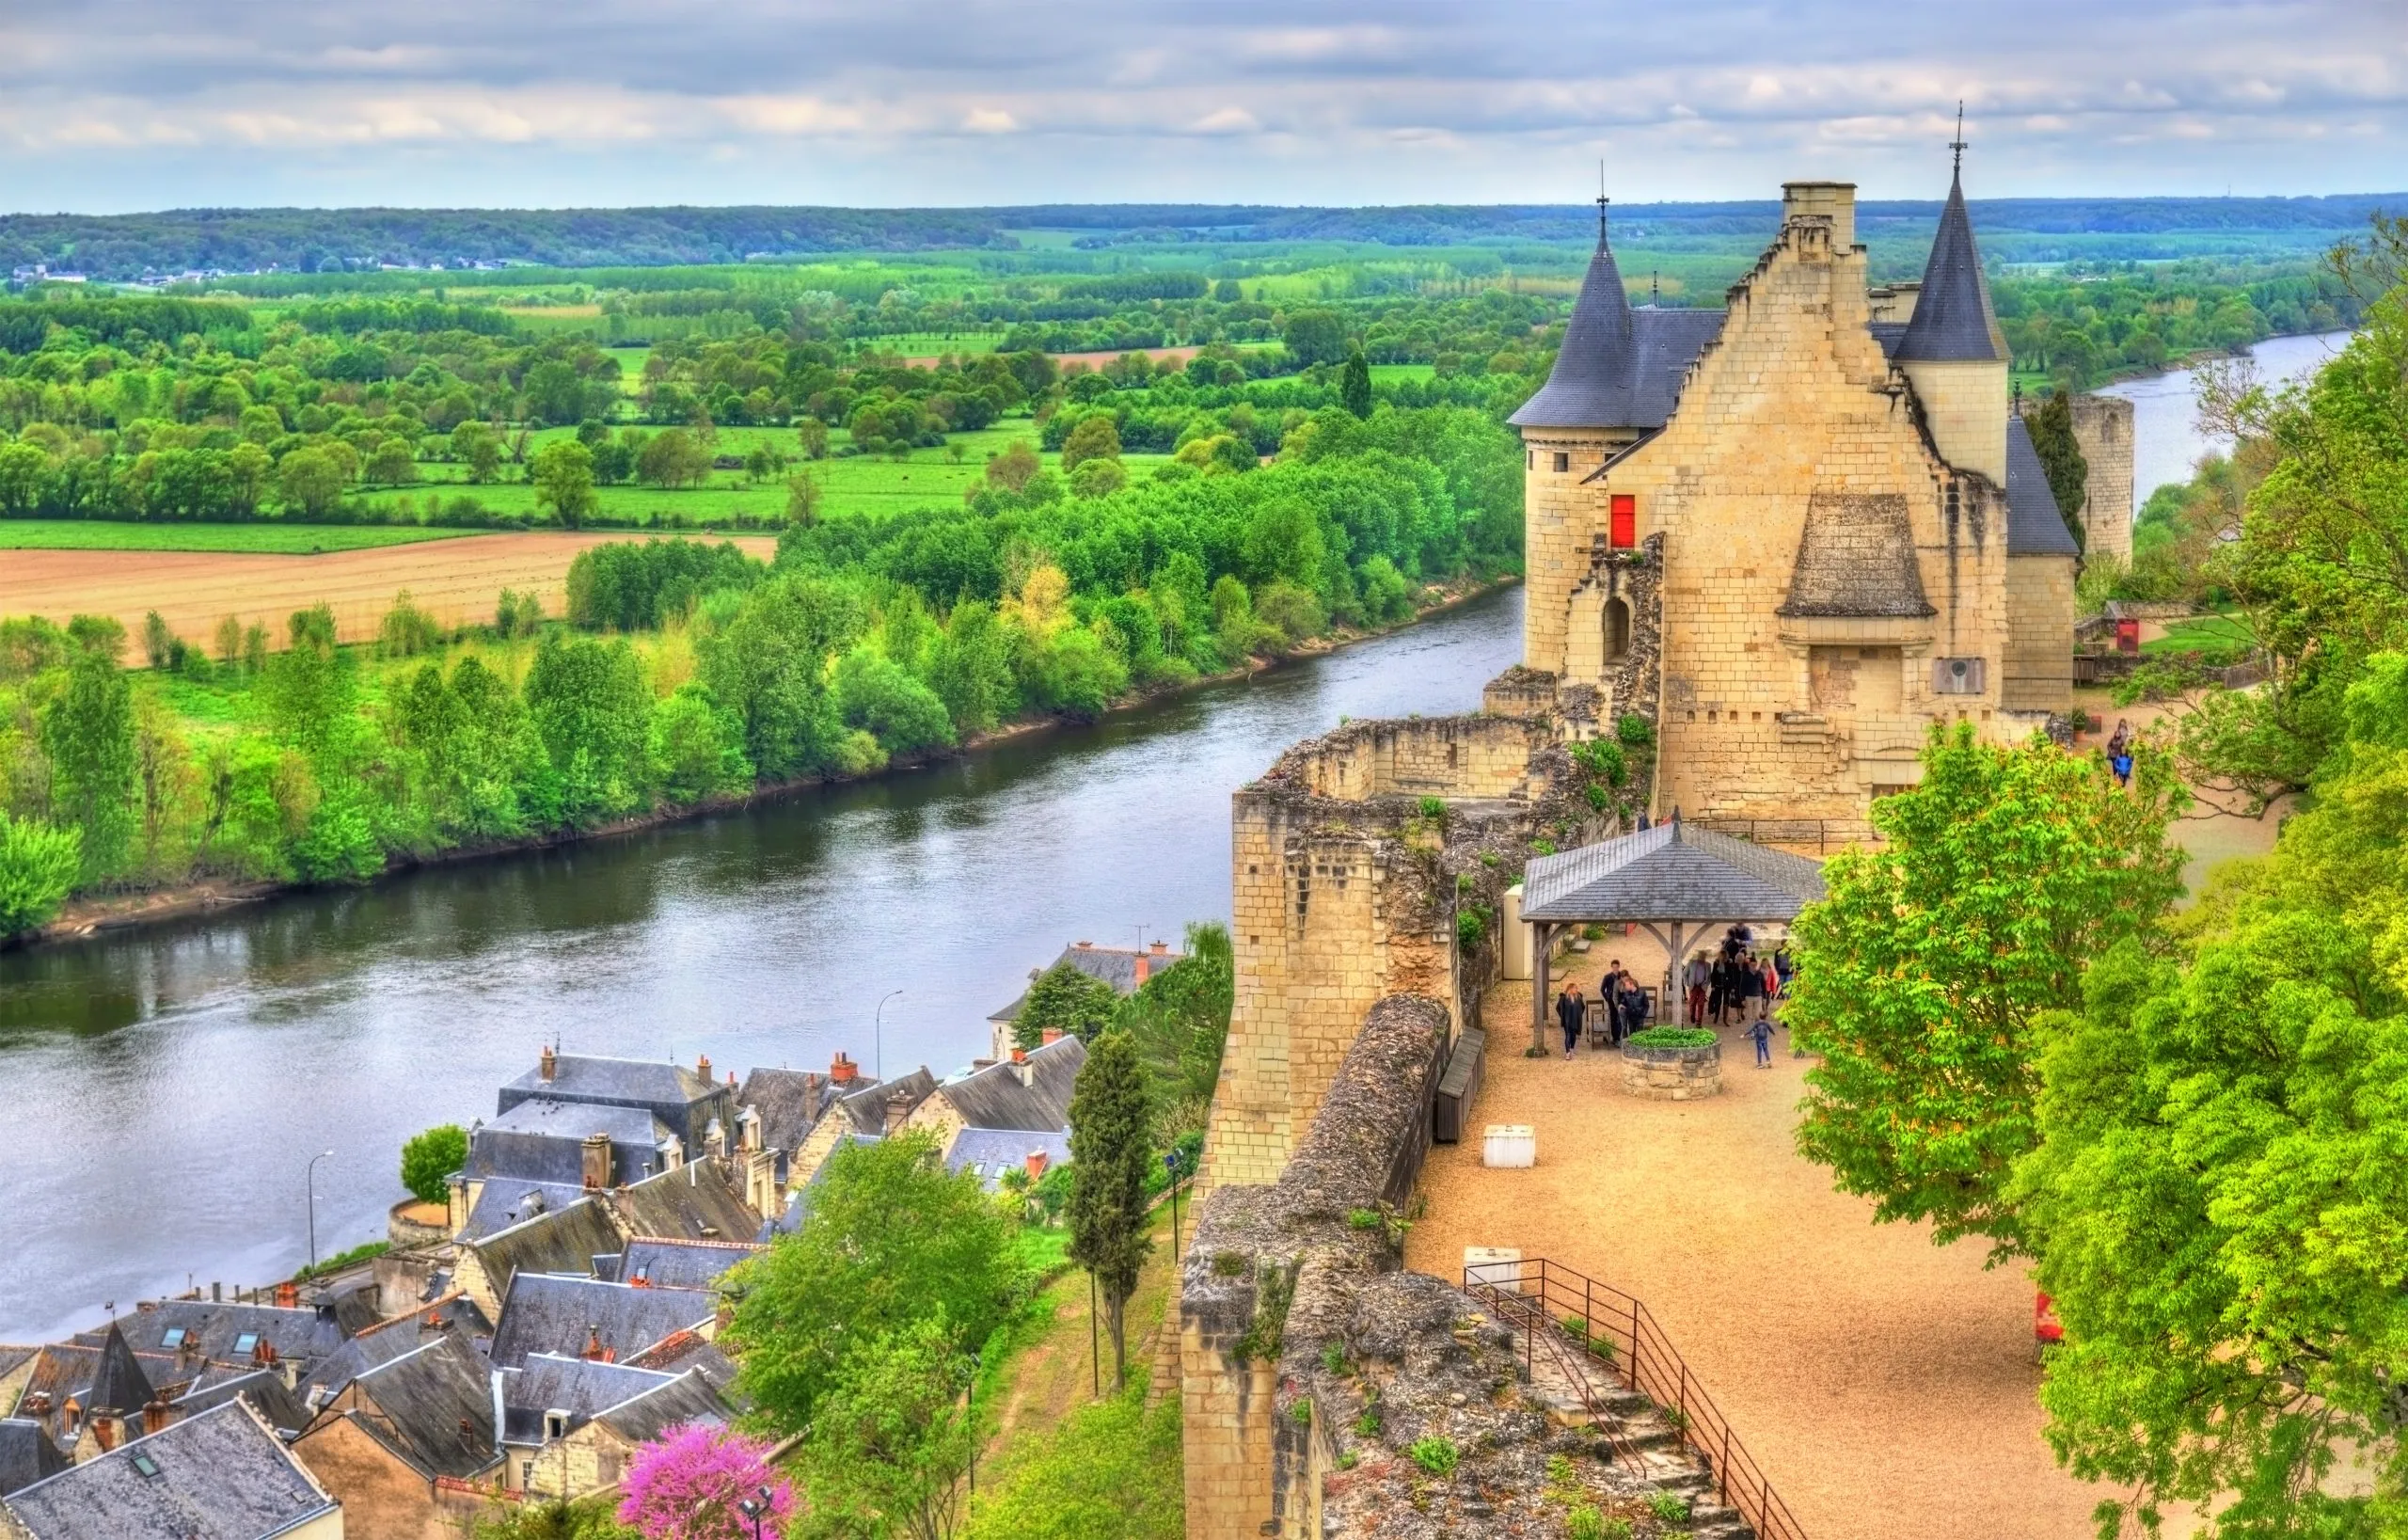 Chateau de Chinon in the Loire Valley, France. UNESCO world heritage site